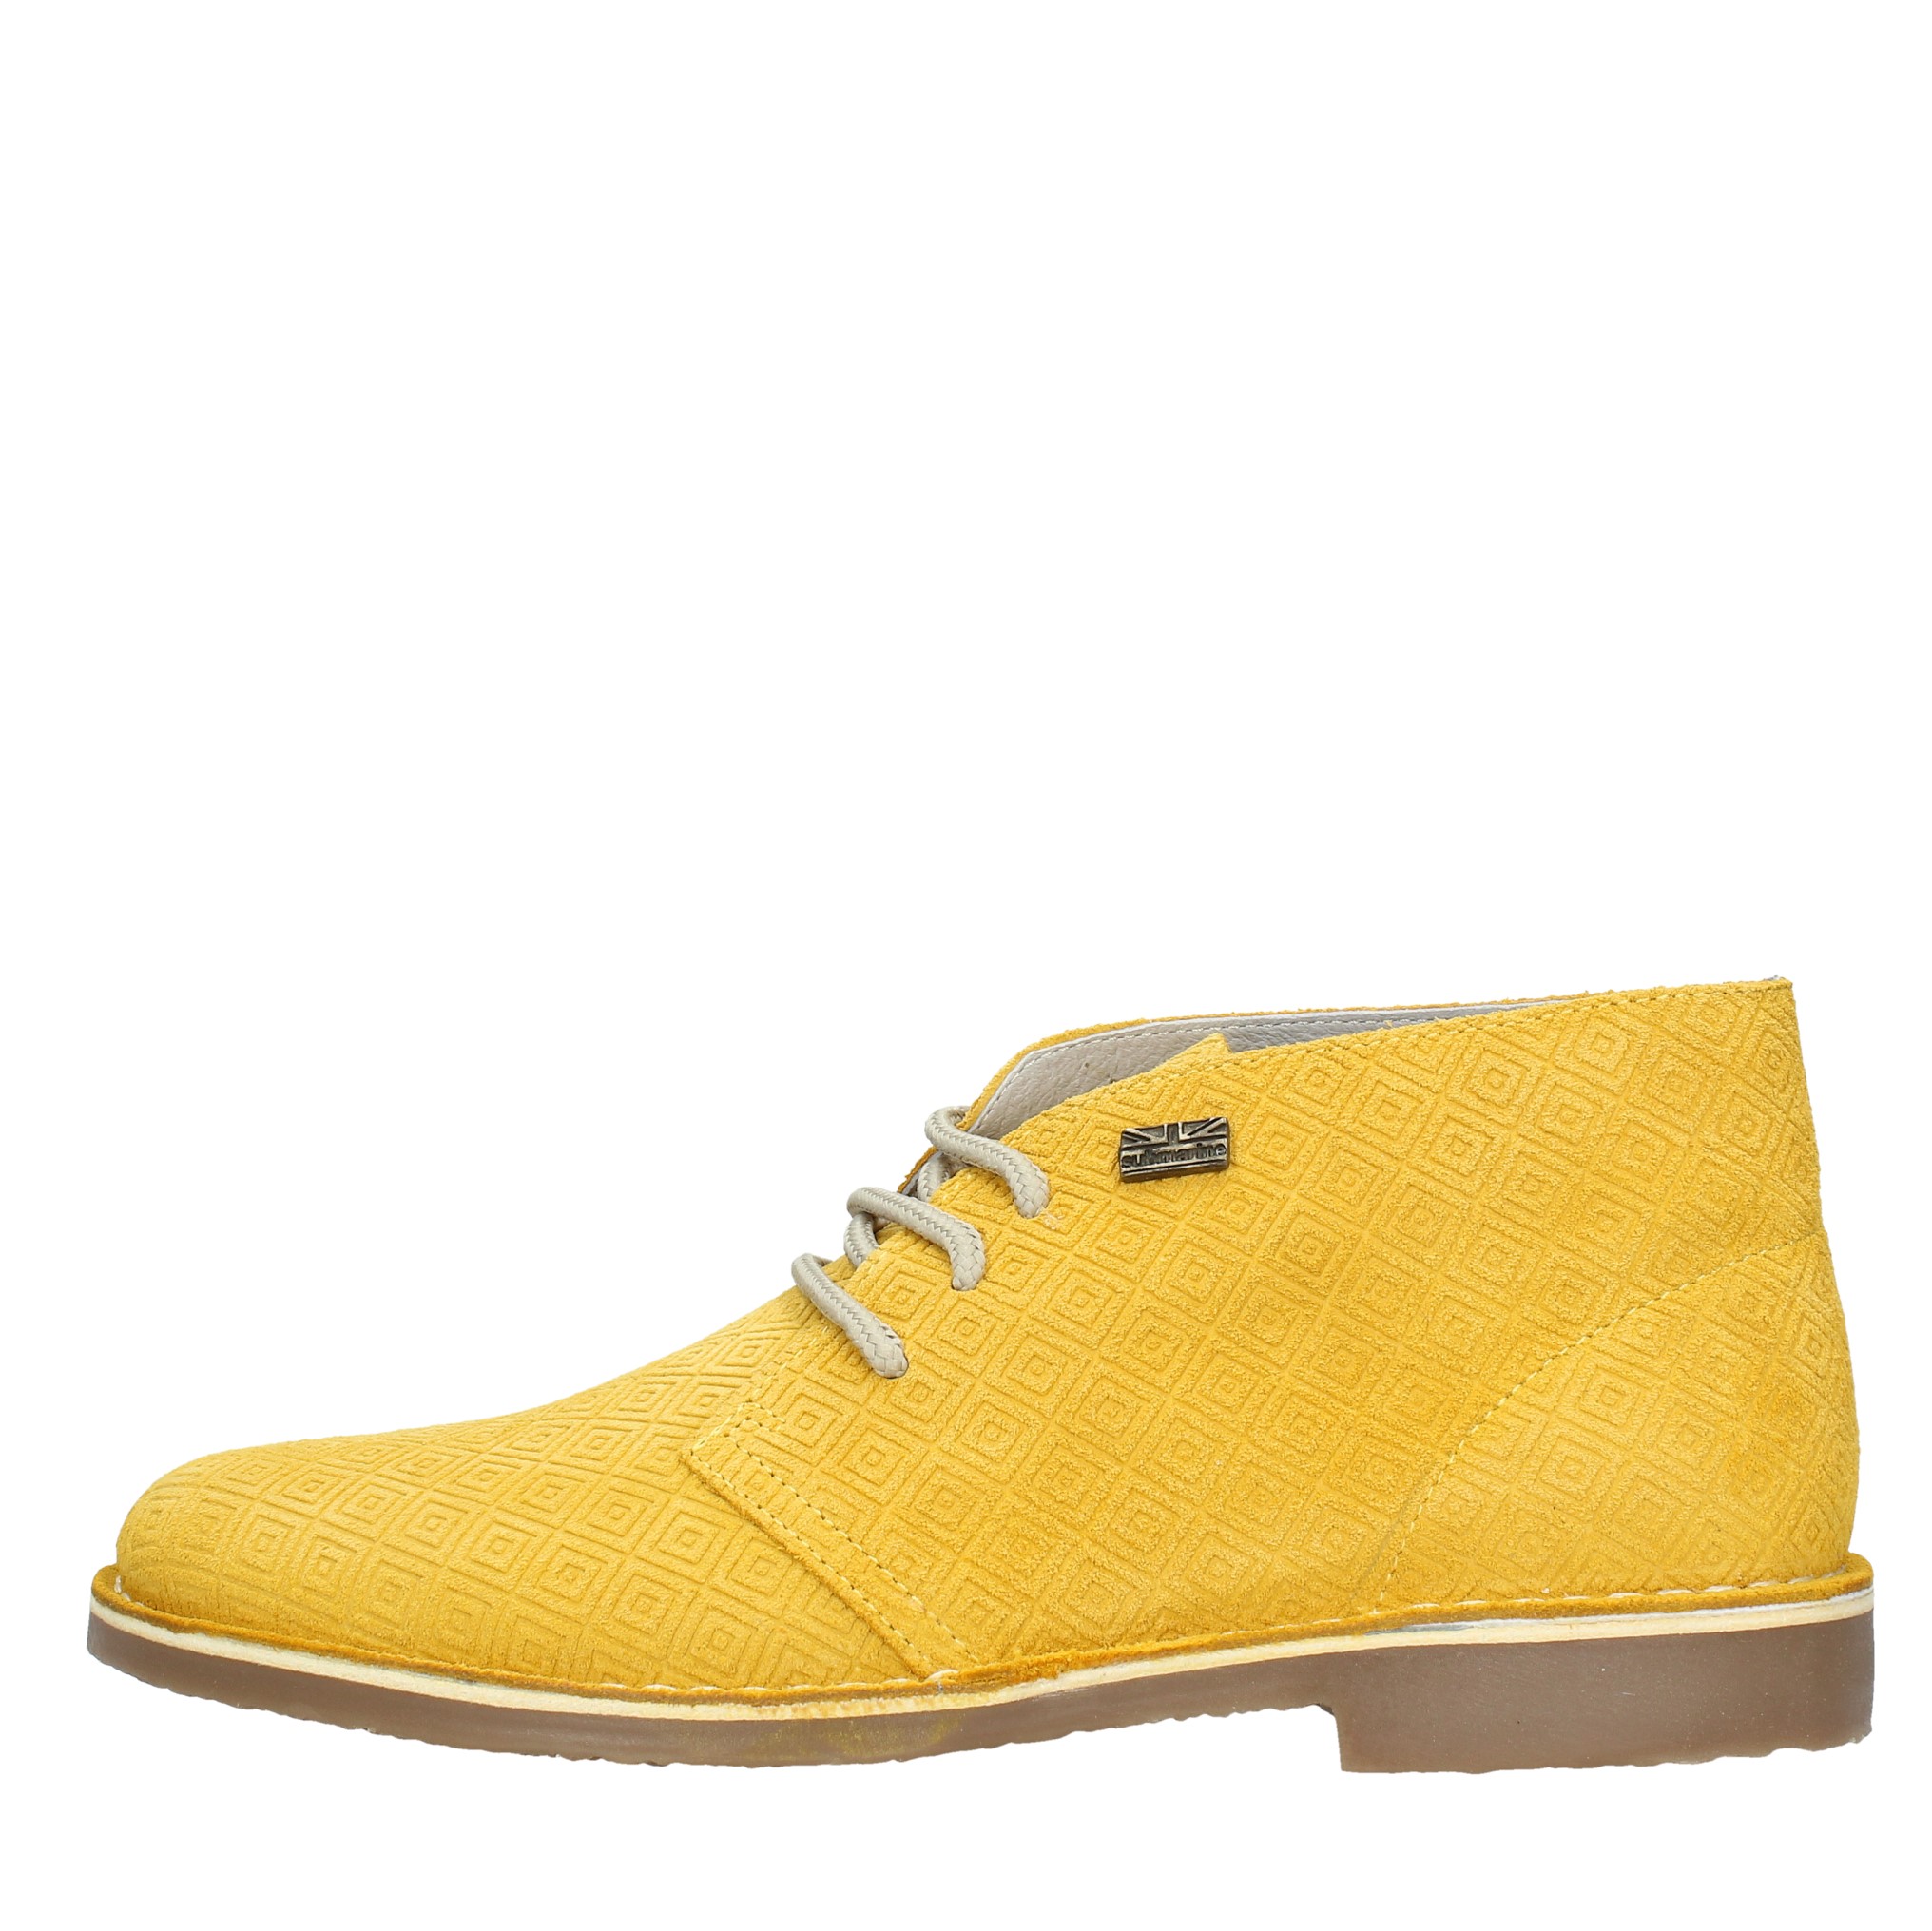 Ankle boots Yellow - SUBMARINE - Ginevra calzature